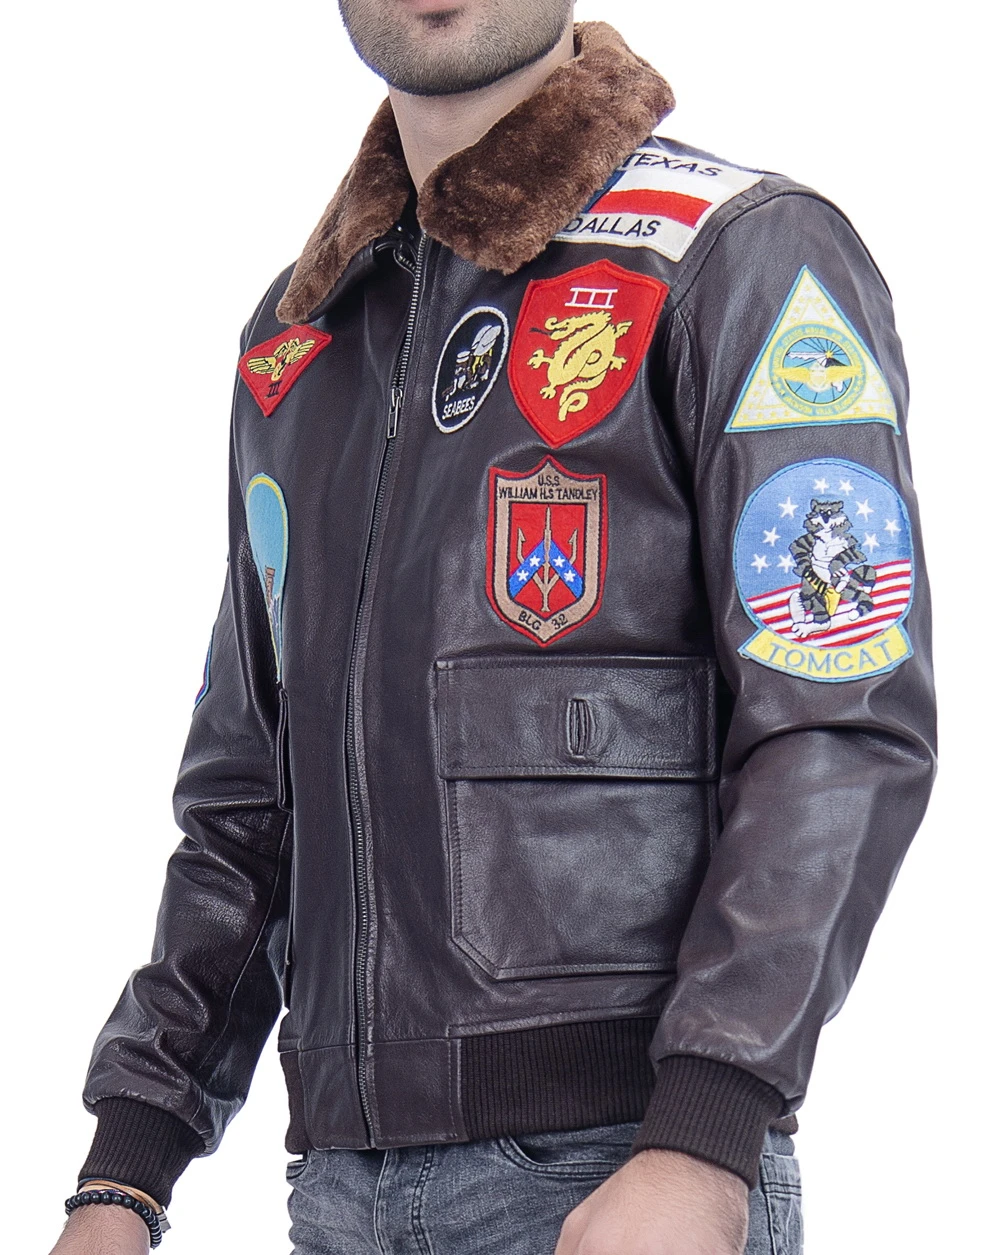 Top Gun G-1 Navy flight leather jacket as worn by Pete Maverick Mitchell in the Top Gun movie